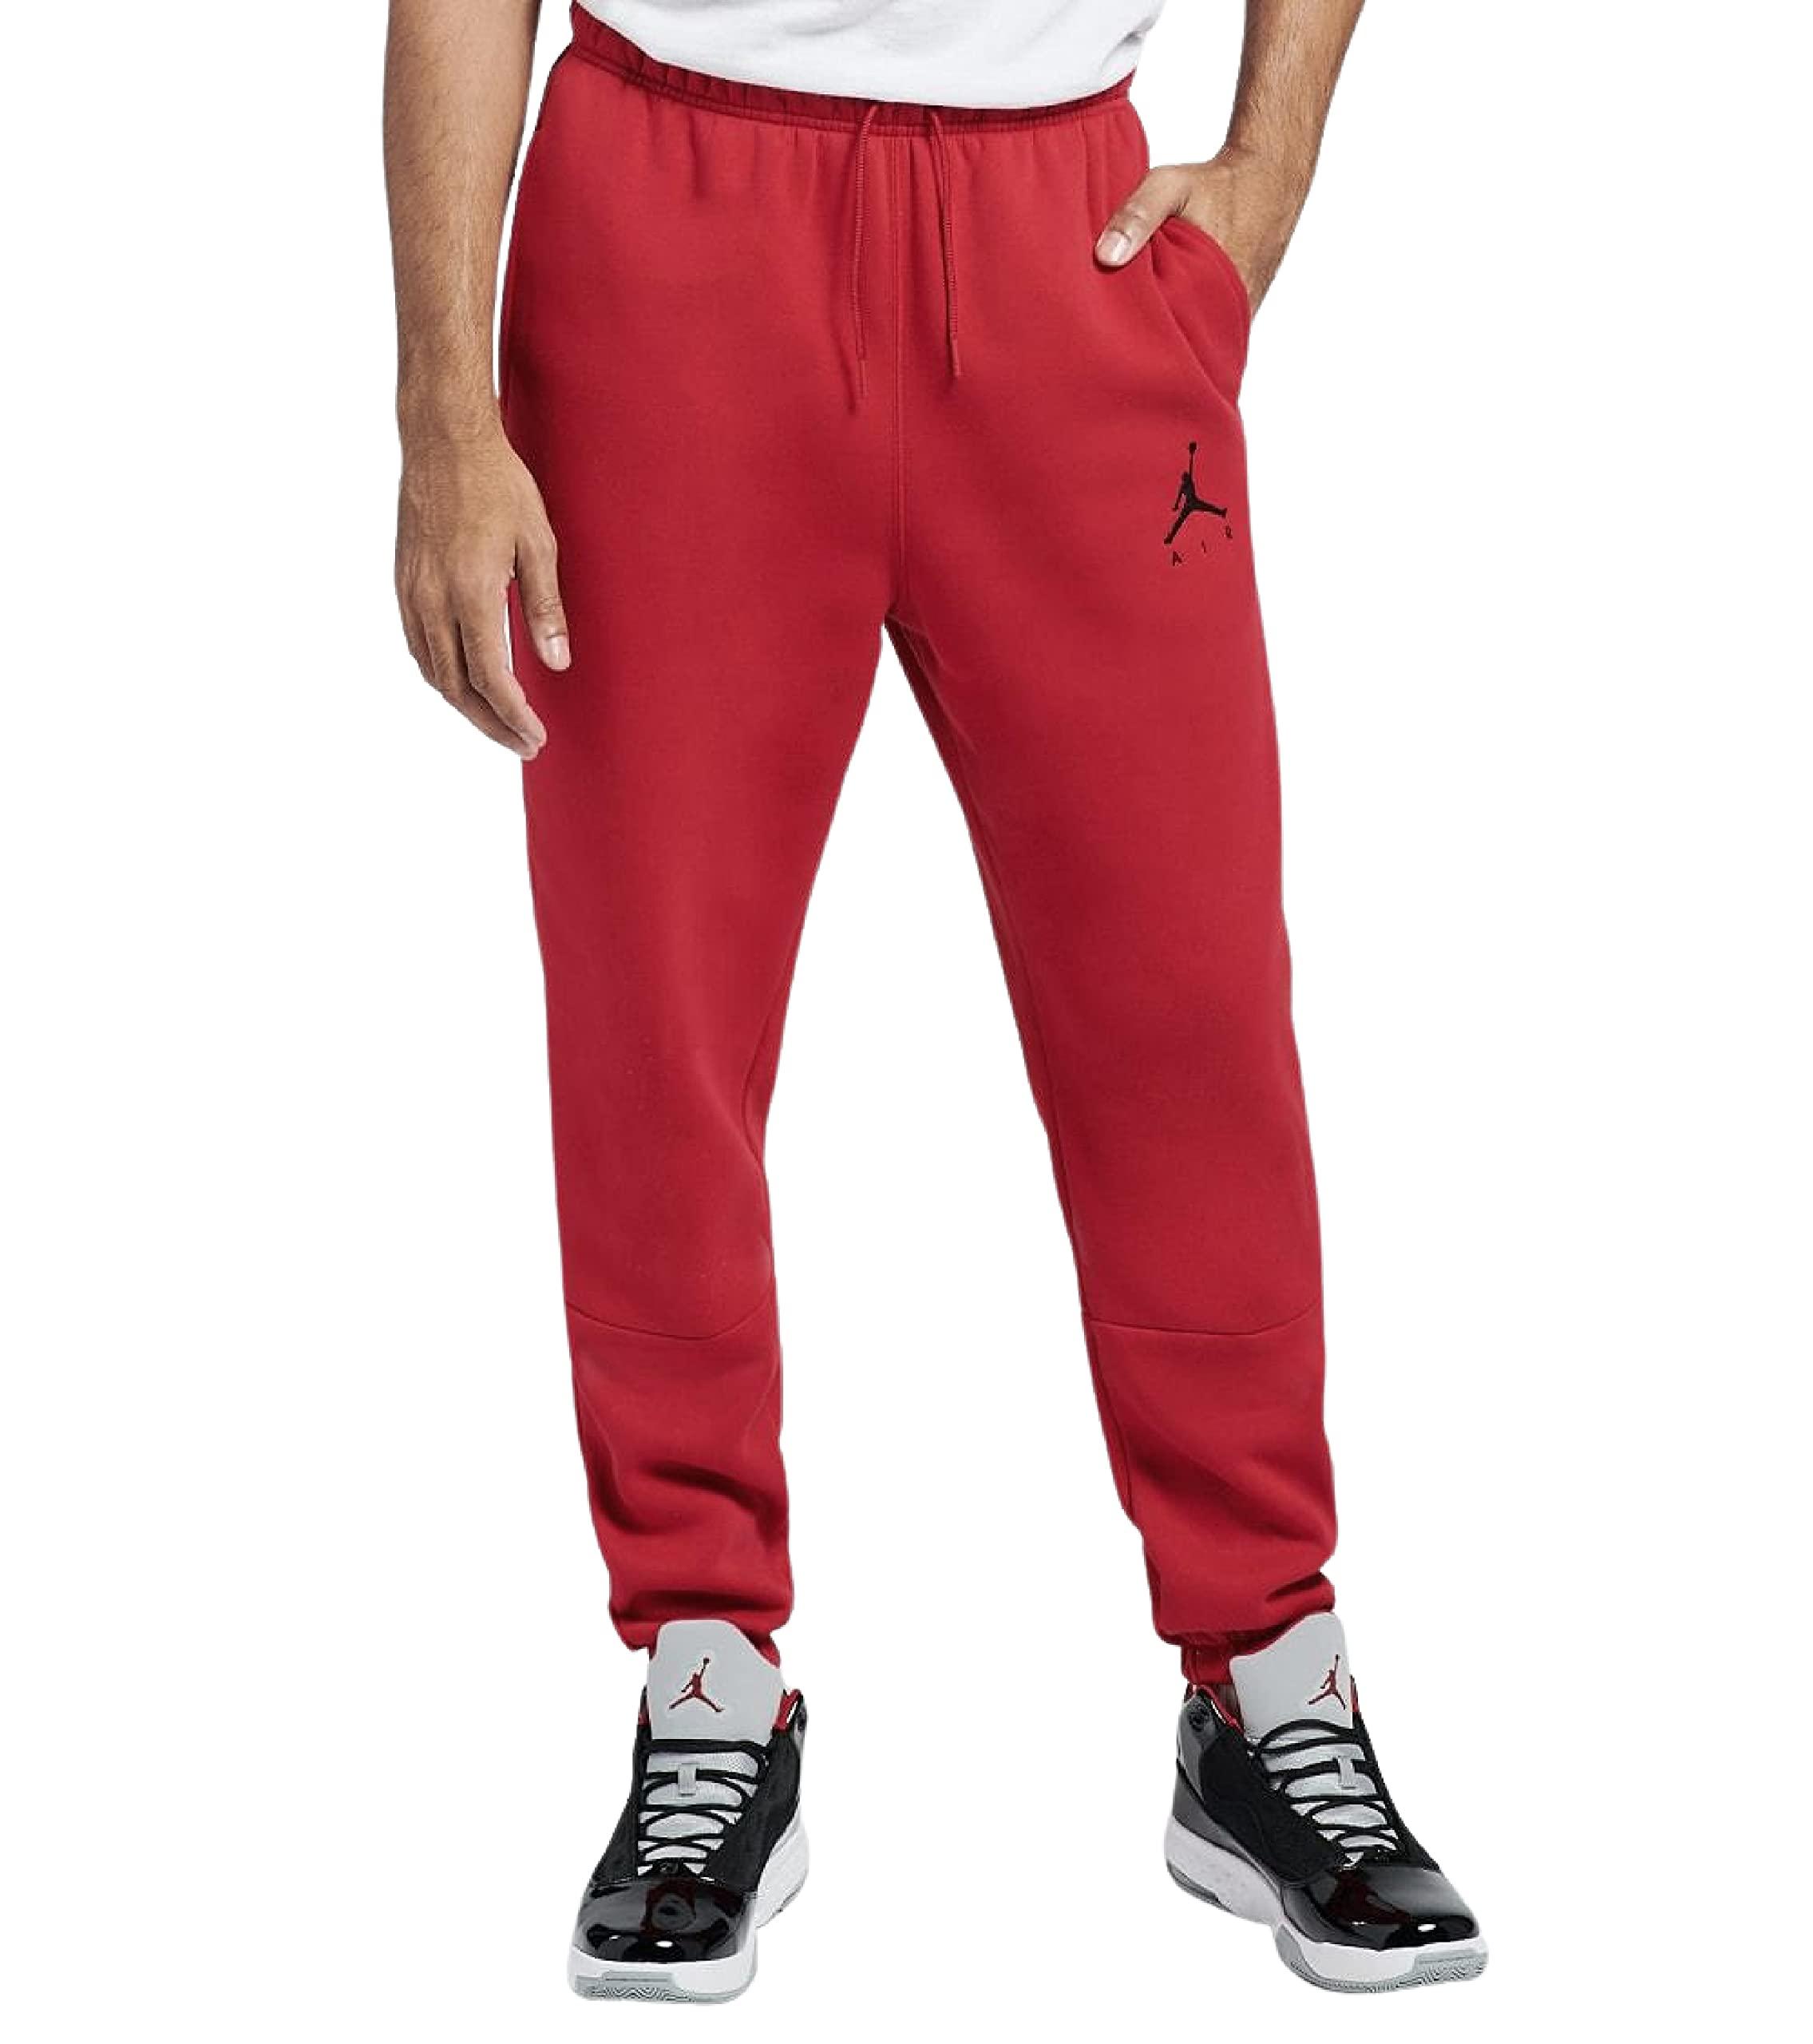 Nike Air Jordan S Jumpman Fleece Jogging Pants Performance Tracksuit  Bottoms Gym Red/gym Red/gym Red/black Xl for Men - Save 26% - Lyst